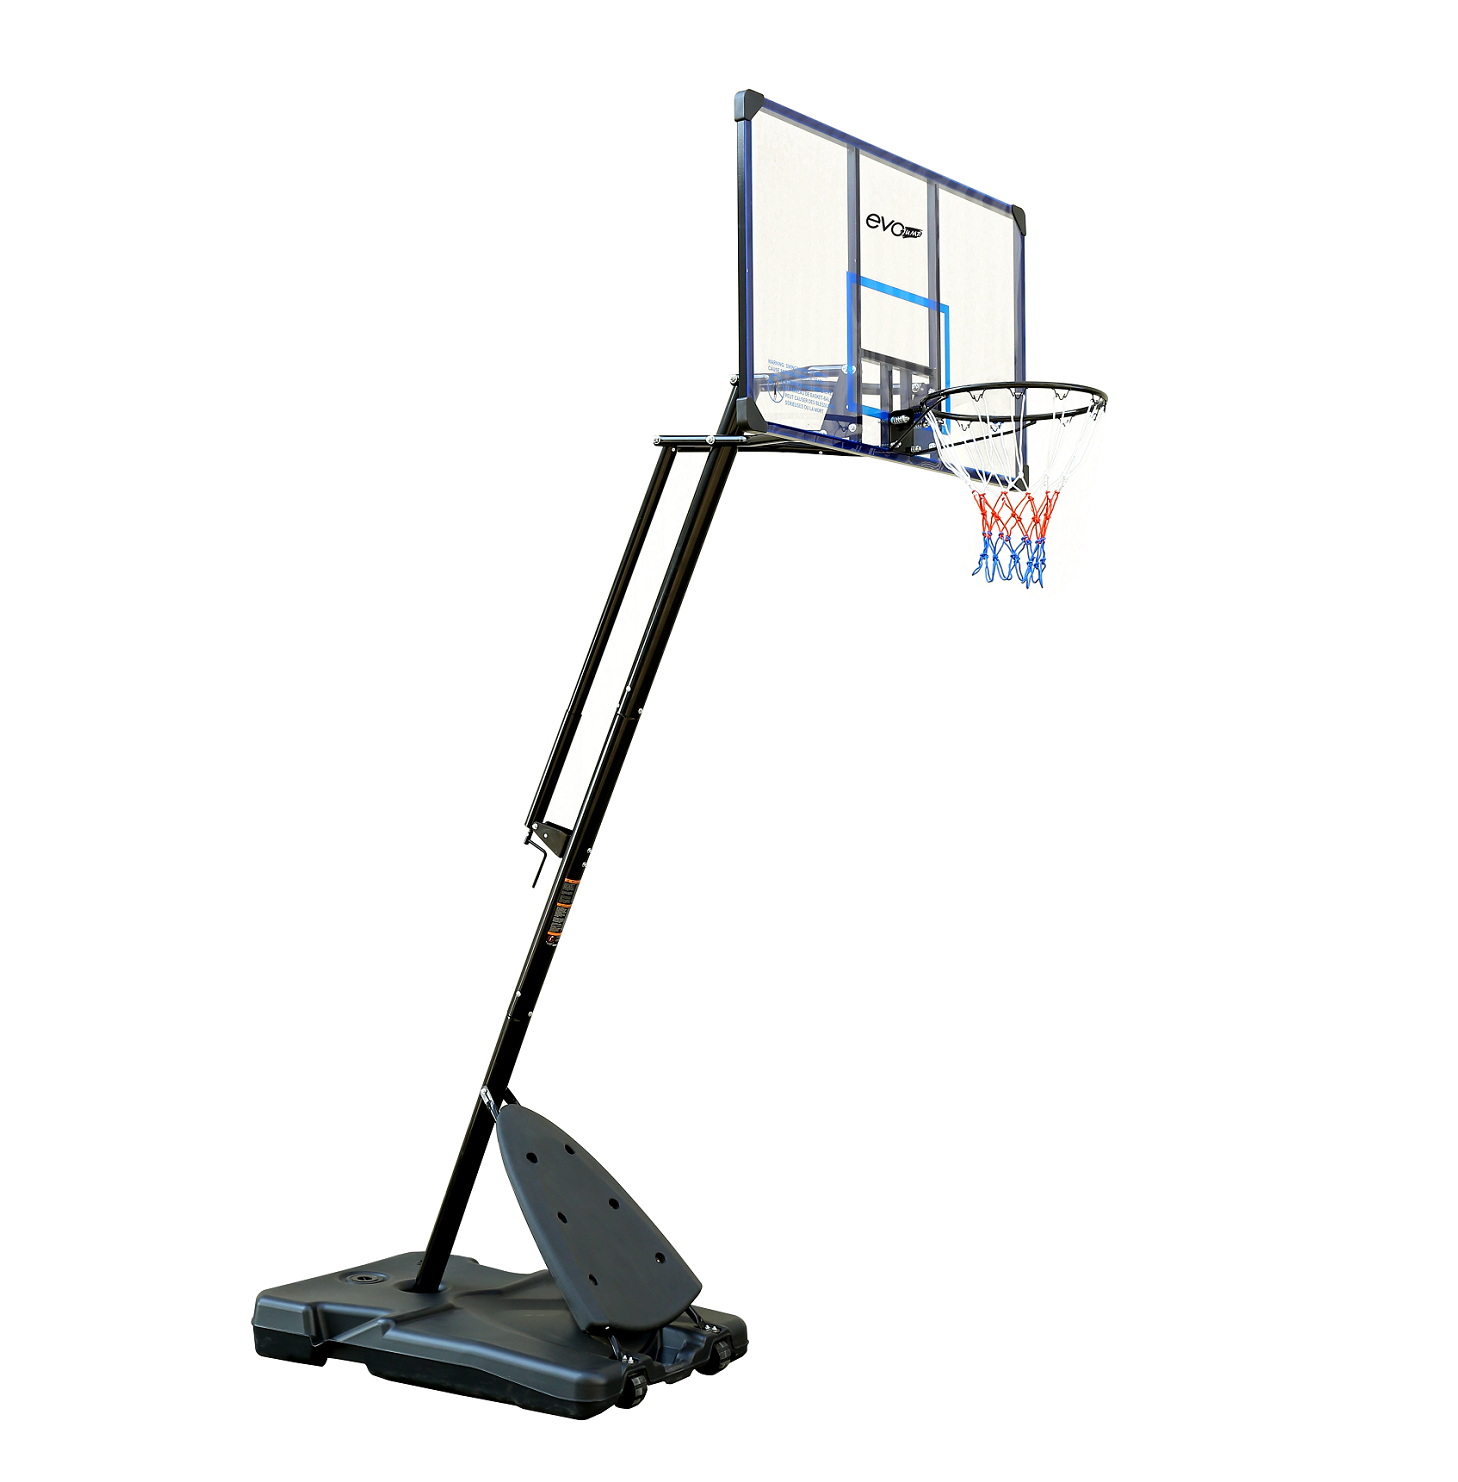 фото Evo jump cd-b016a мобильная баскетбольная стойка